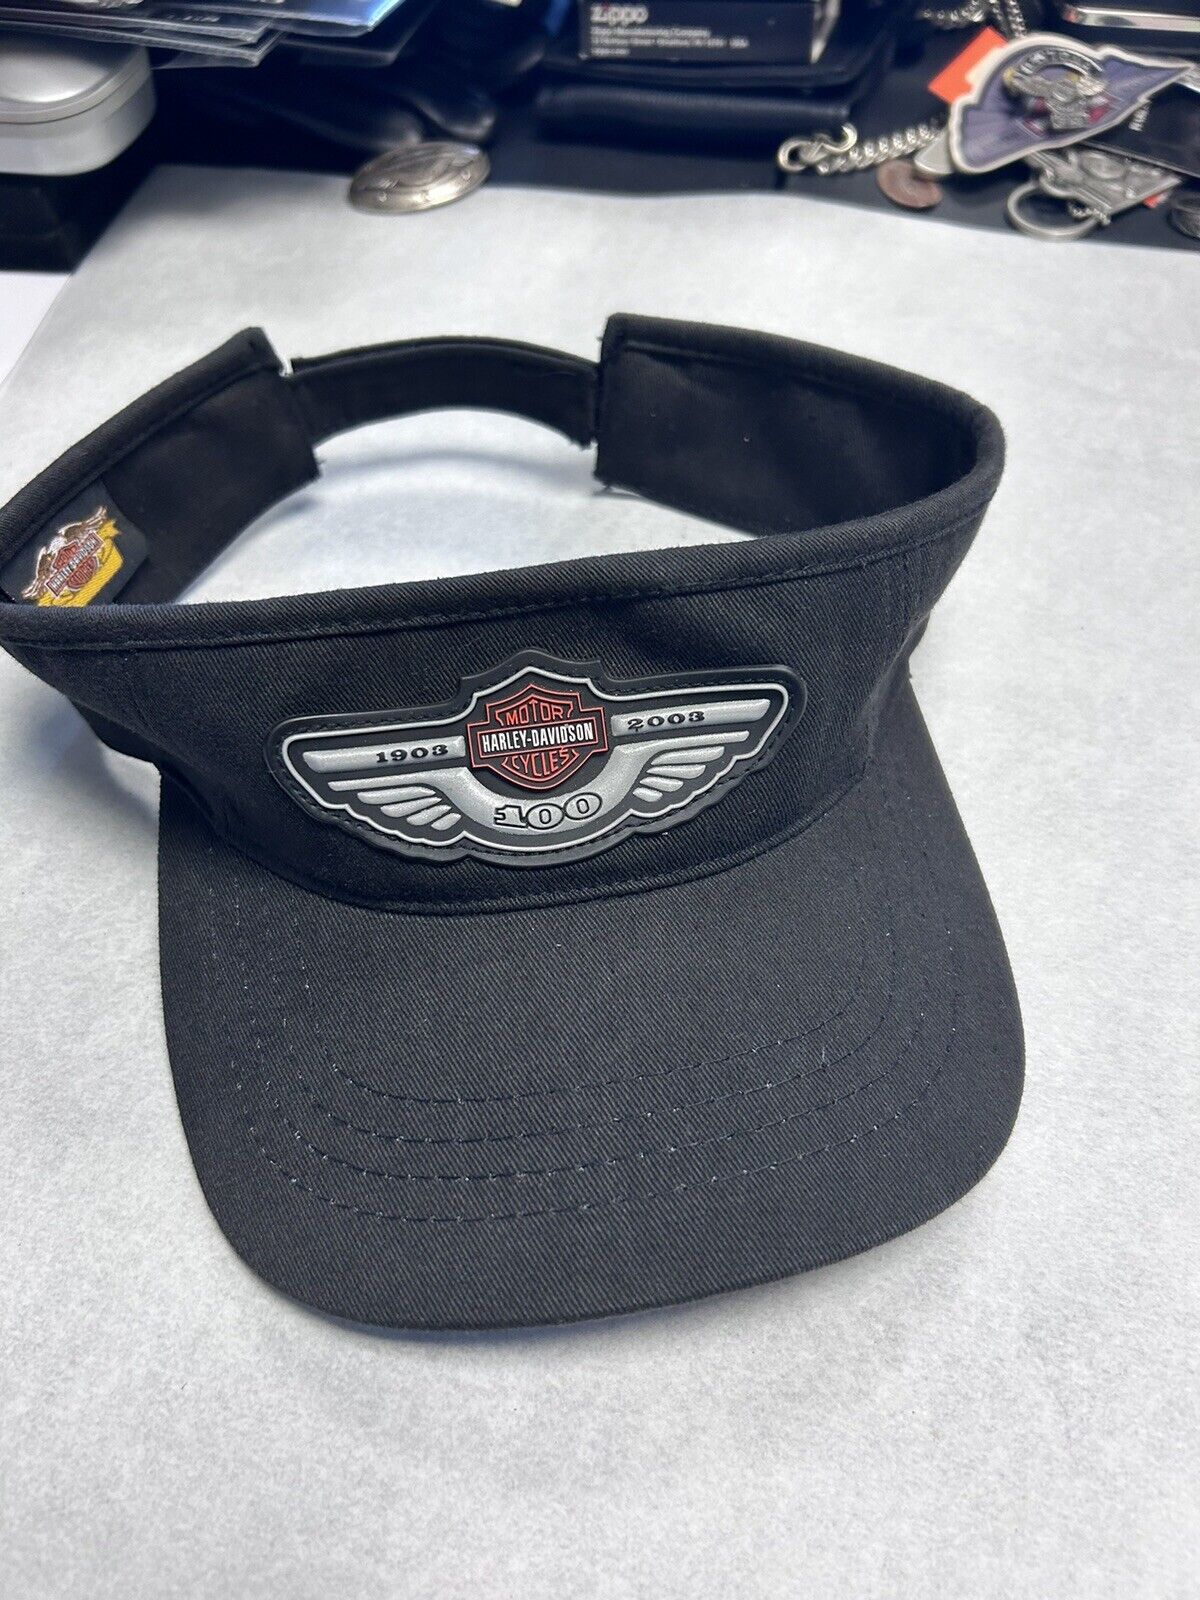 Vintage Harley Davidson 2003 100th Year Anniversary Hat